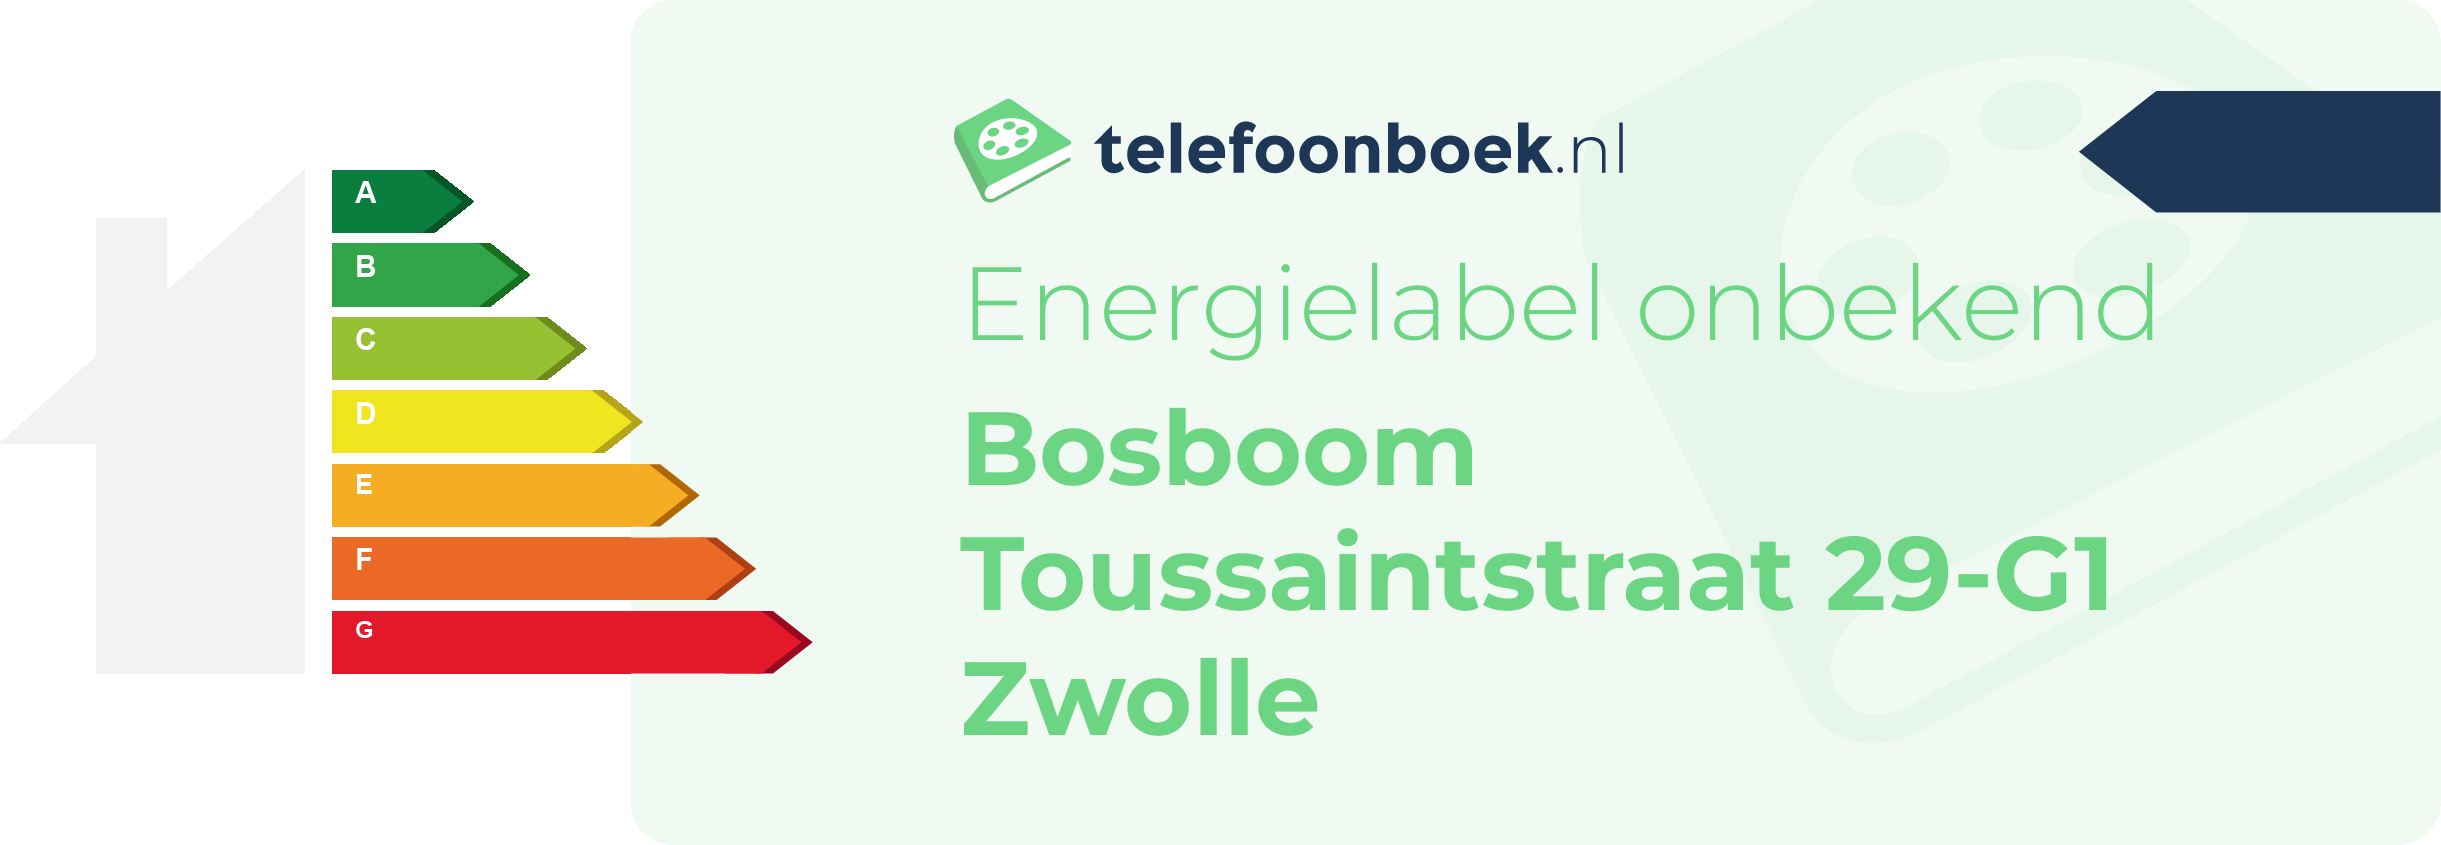 Energielabel Bosboom Toussaintstraat 29-G1 Zwolle